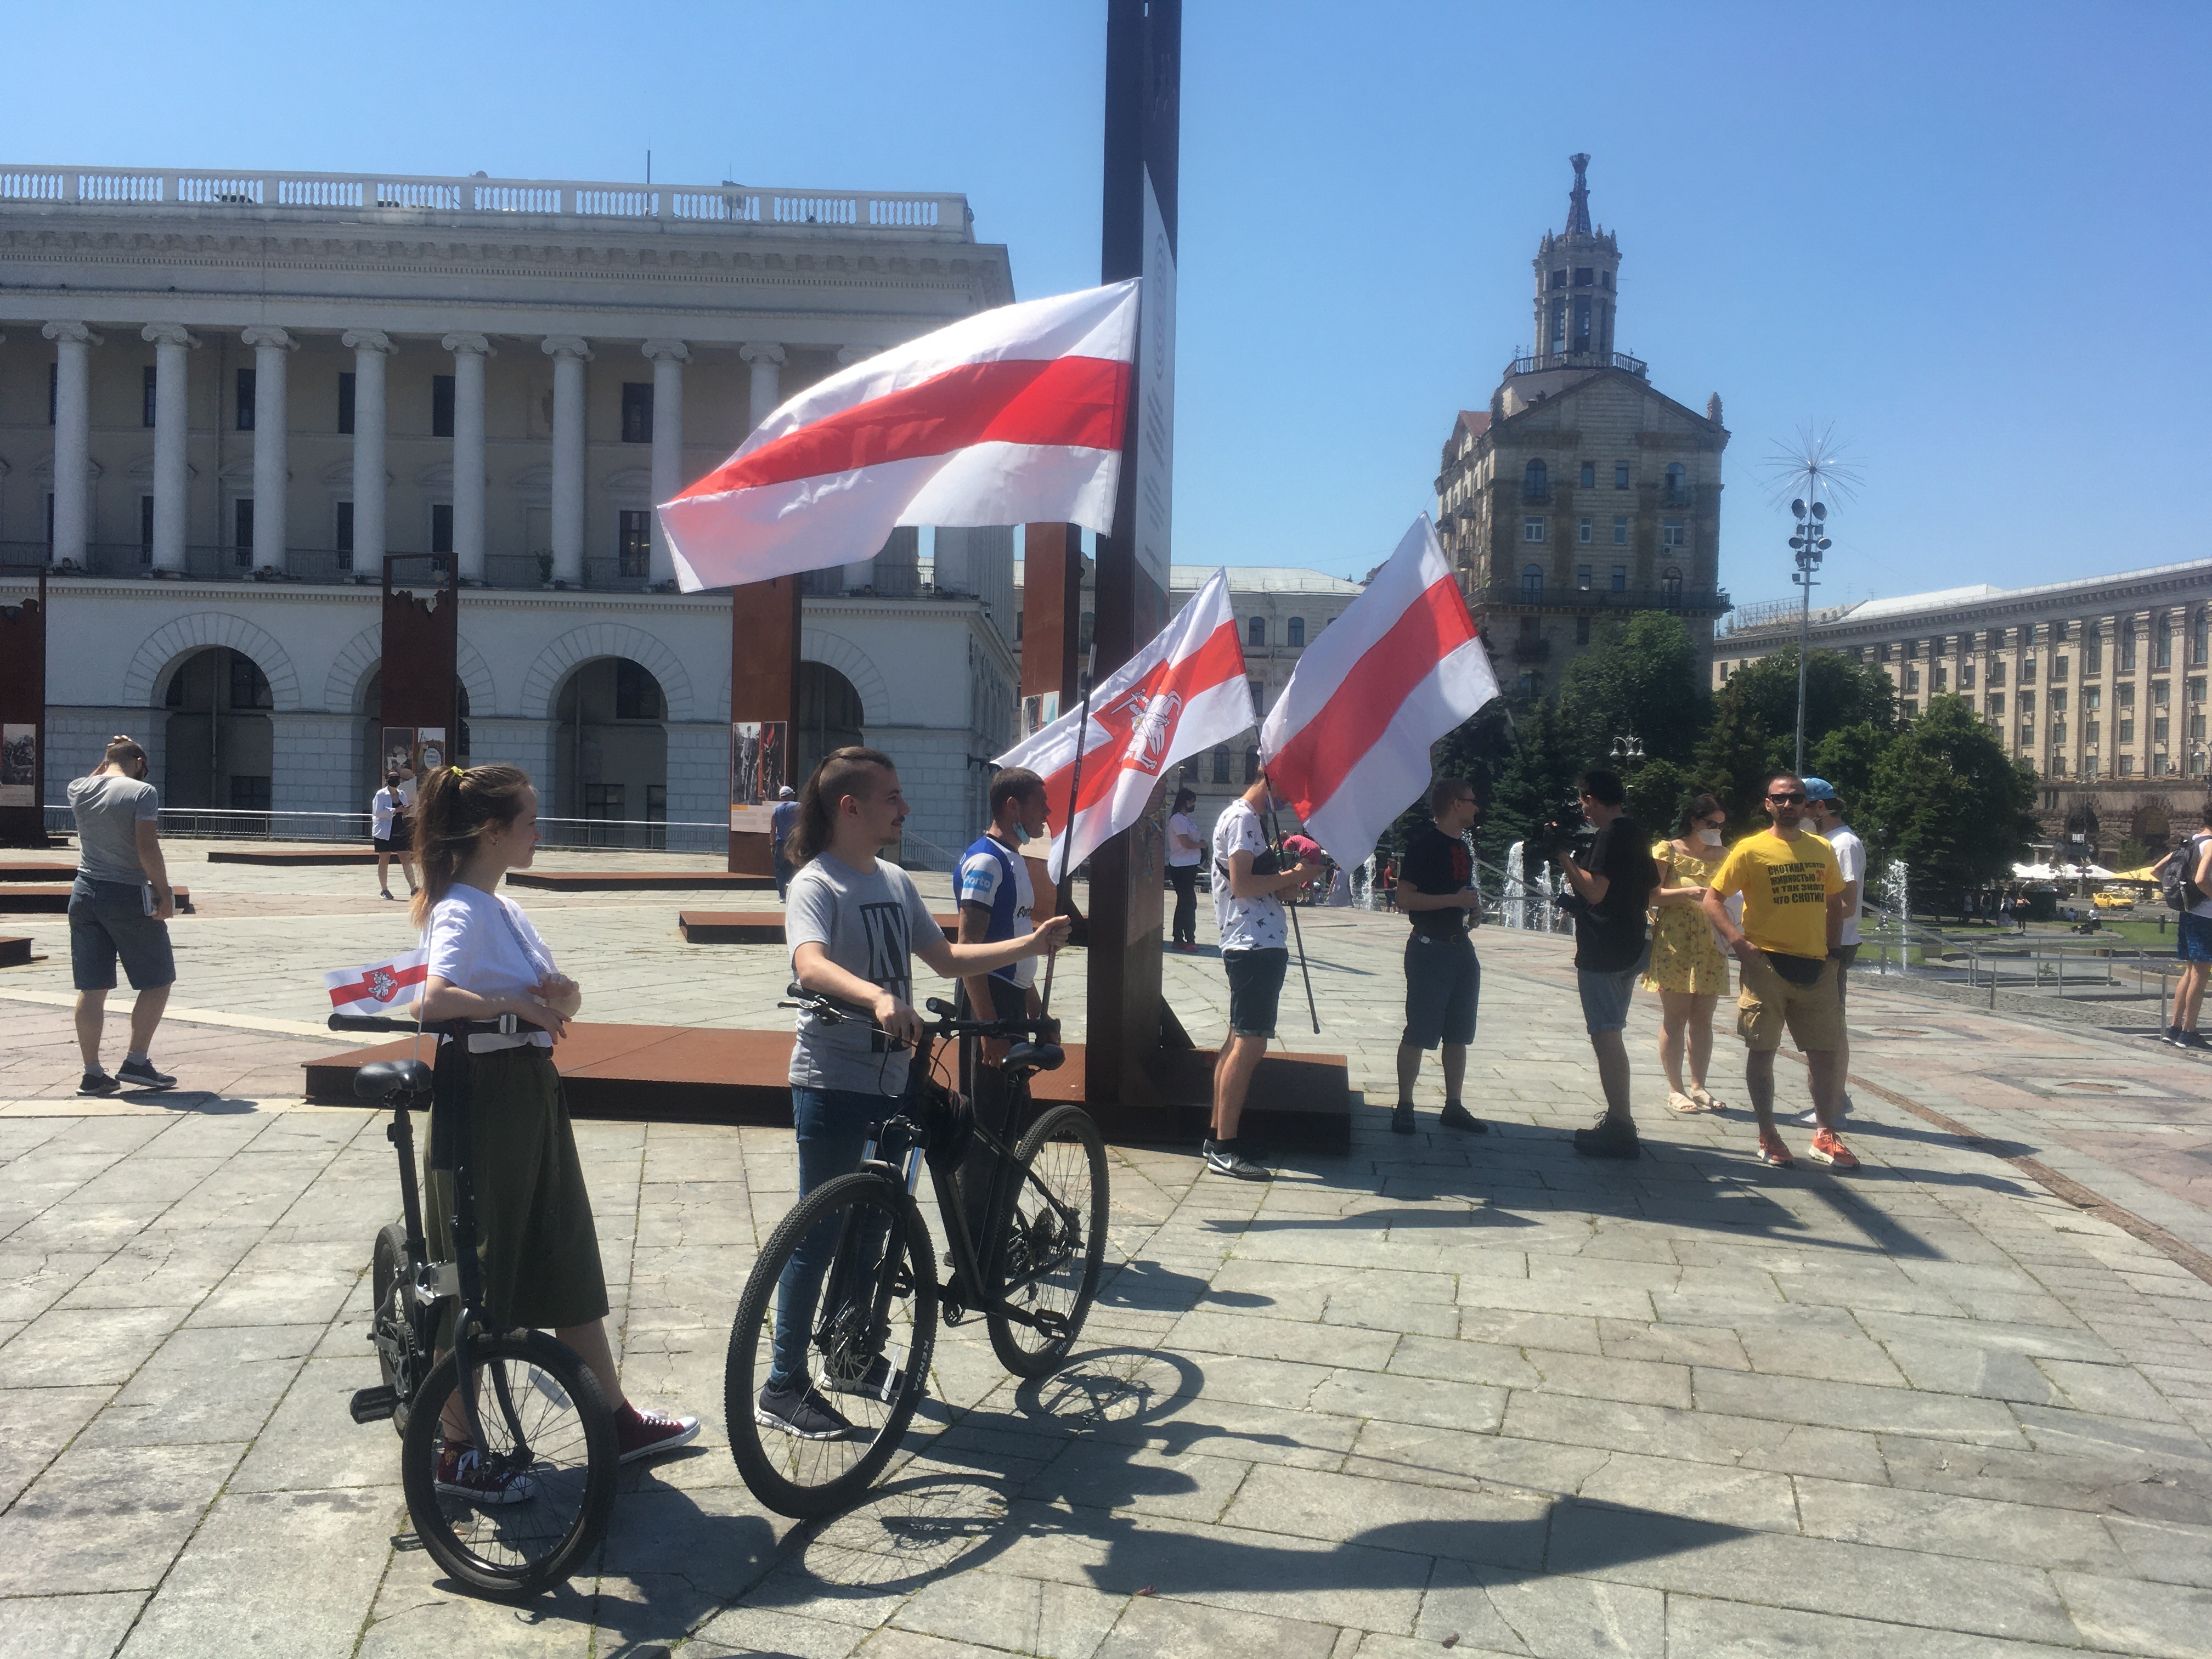 Тапочки как символ протеста: марш белорусской оппозиции в центре Киева